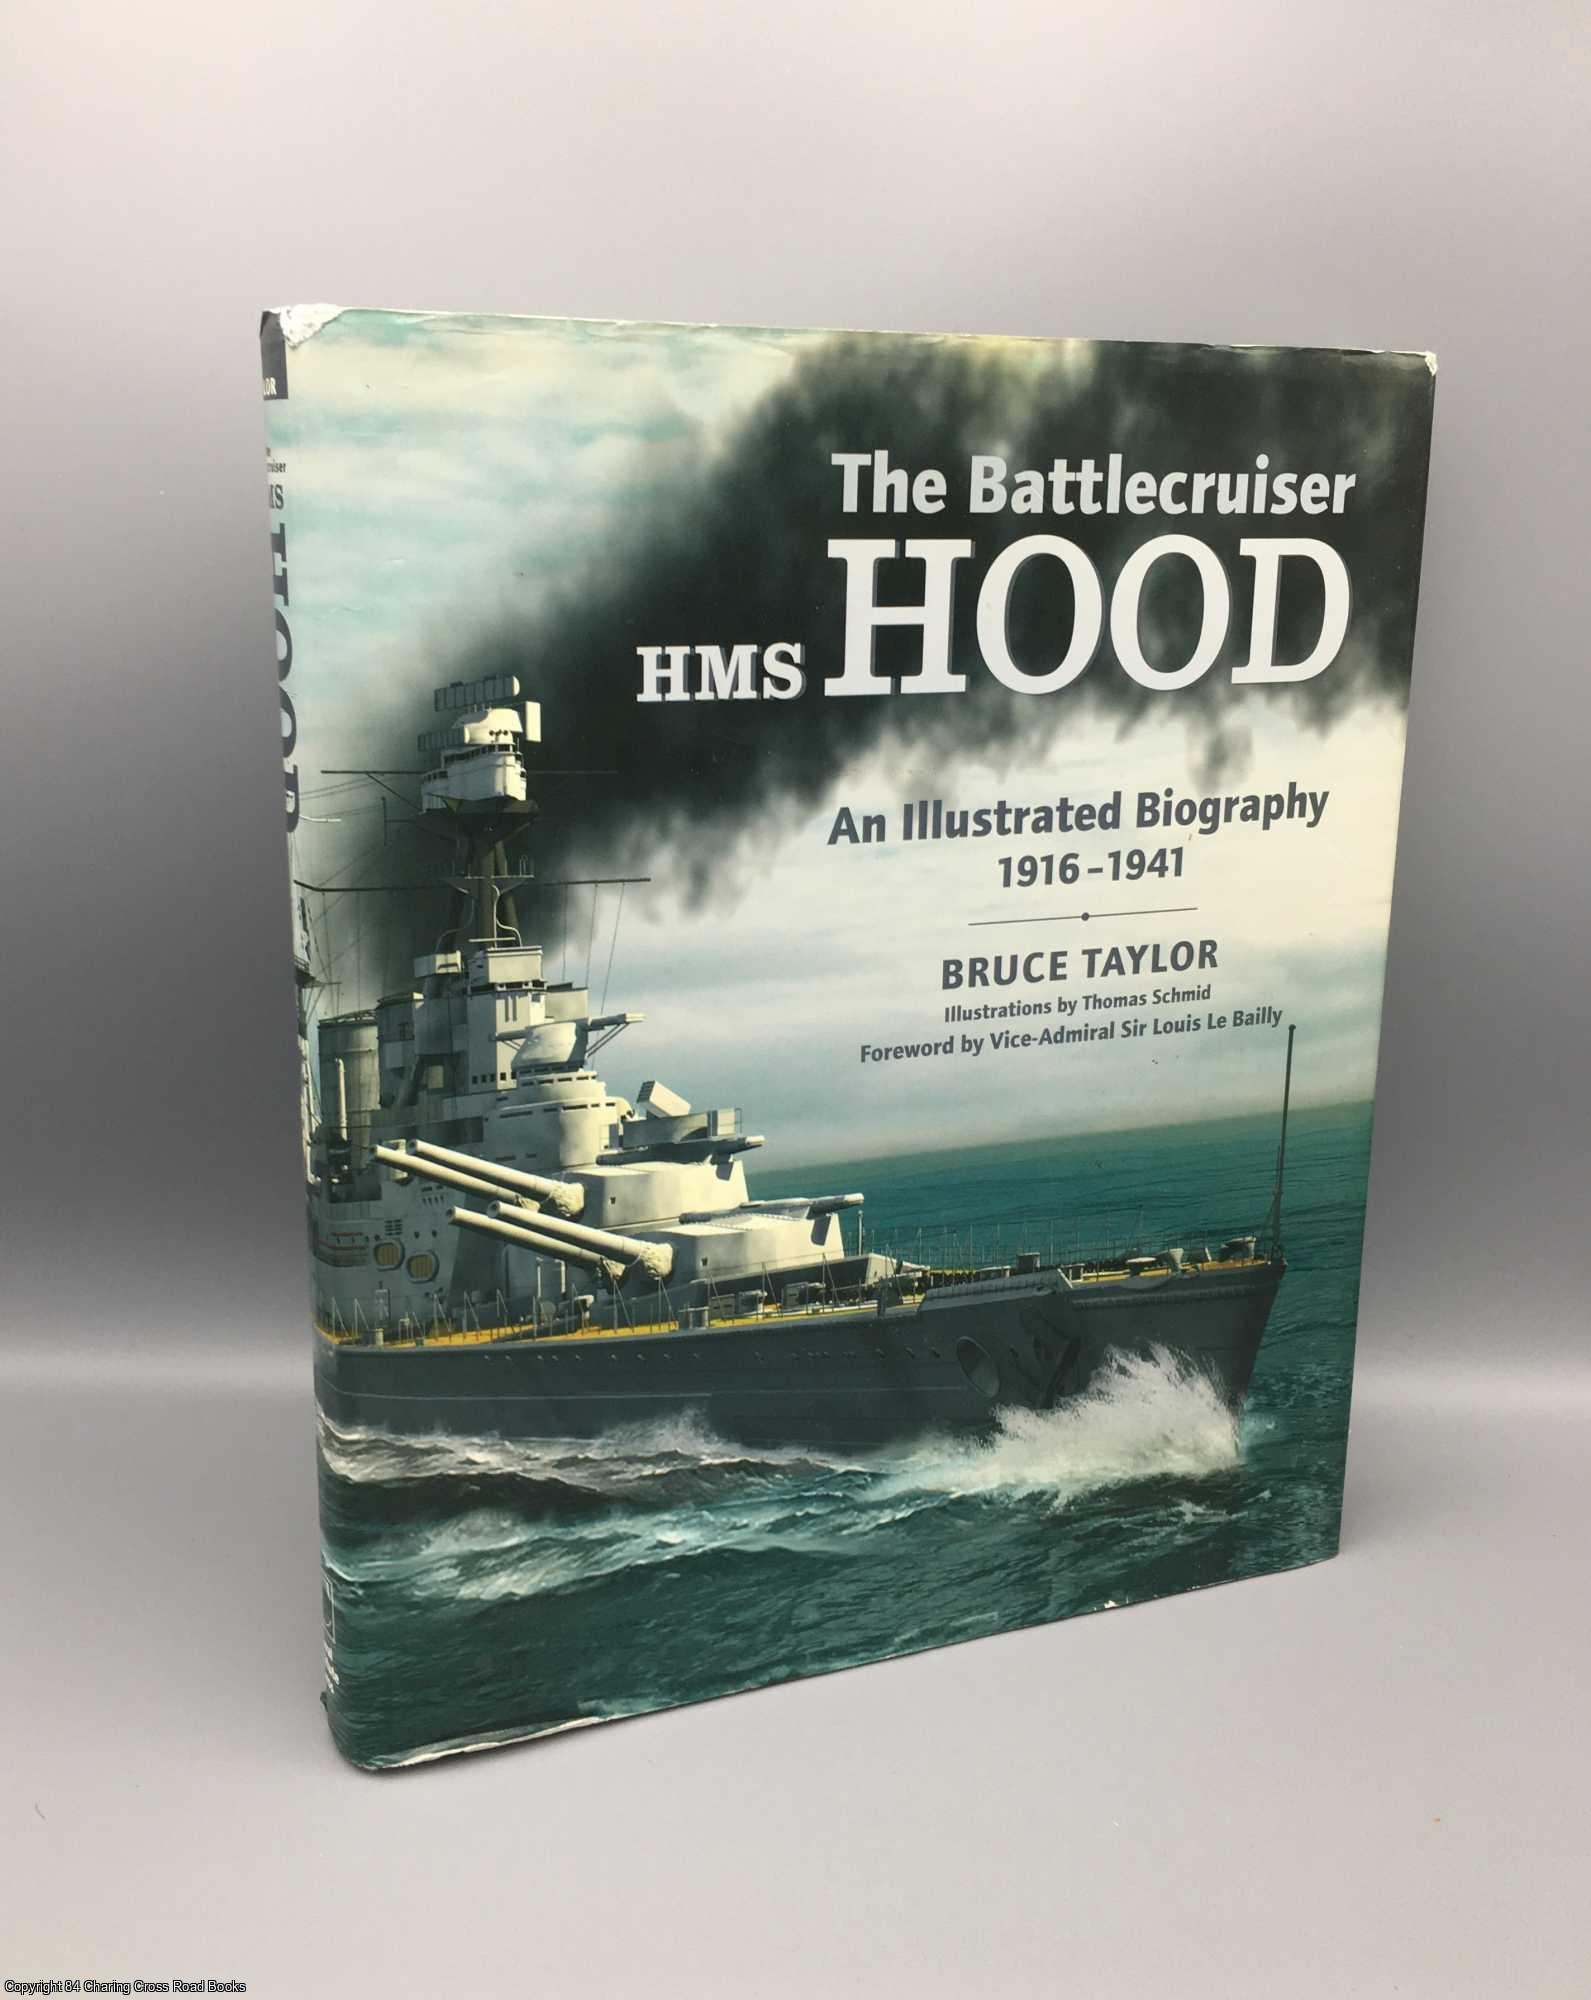 Taylor, Bruce - The Battlecruiser HMS Hood: An Illustrated Biography 1916-1941